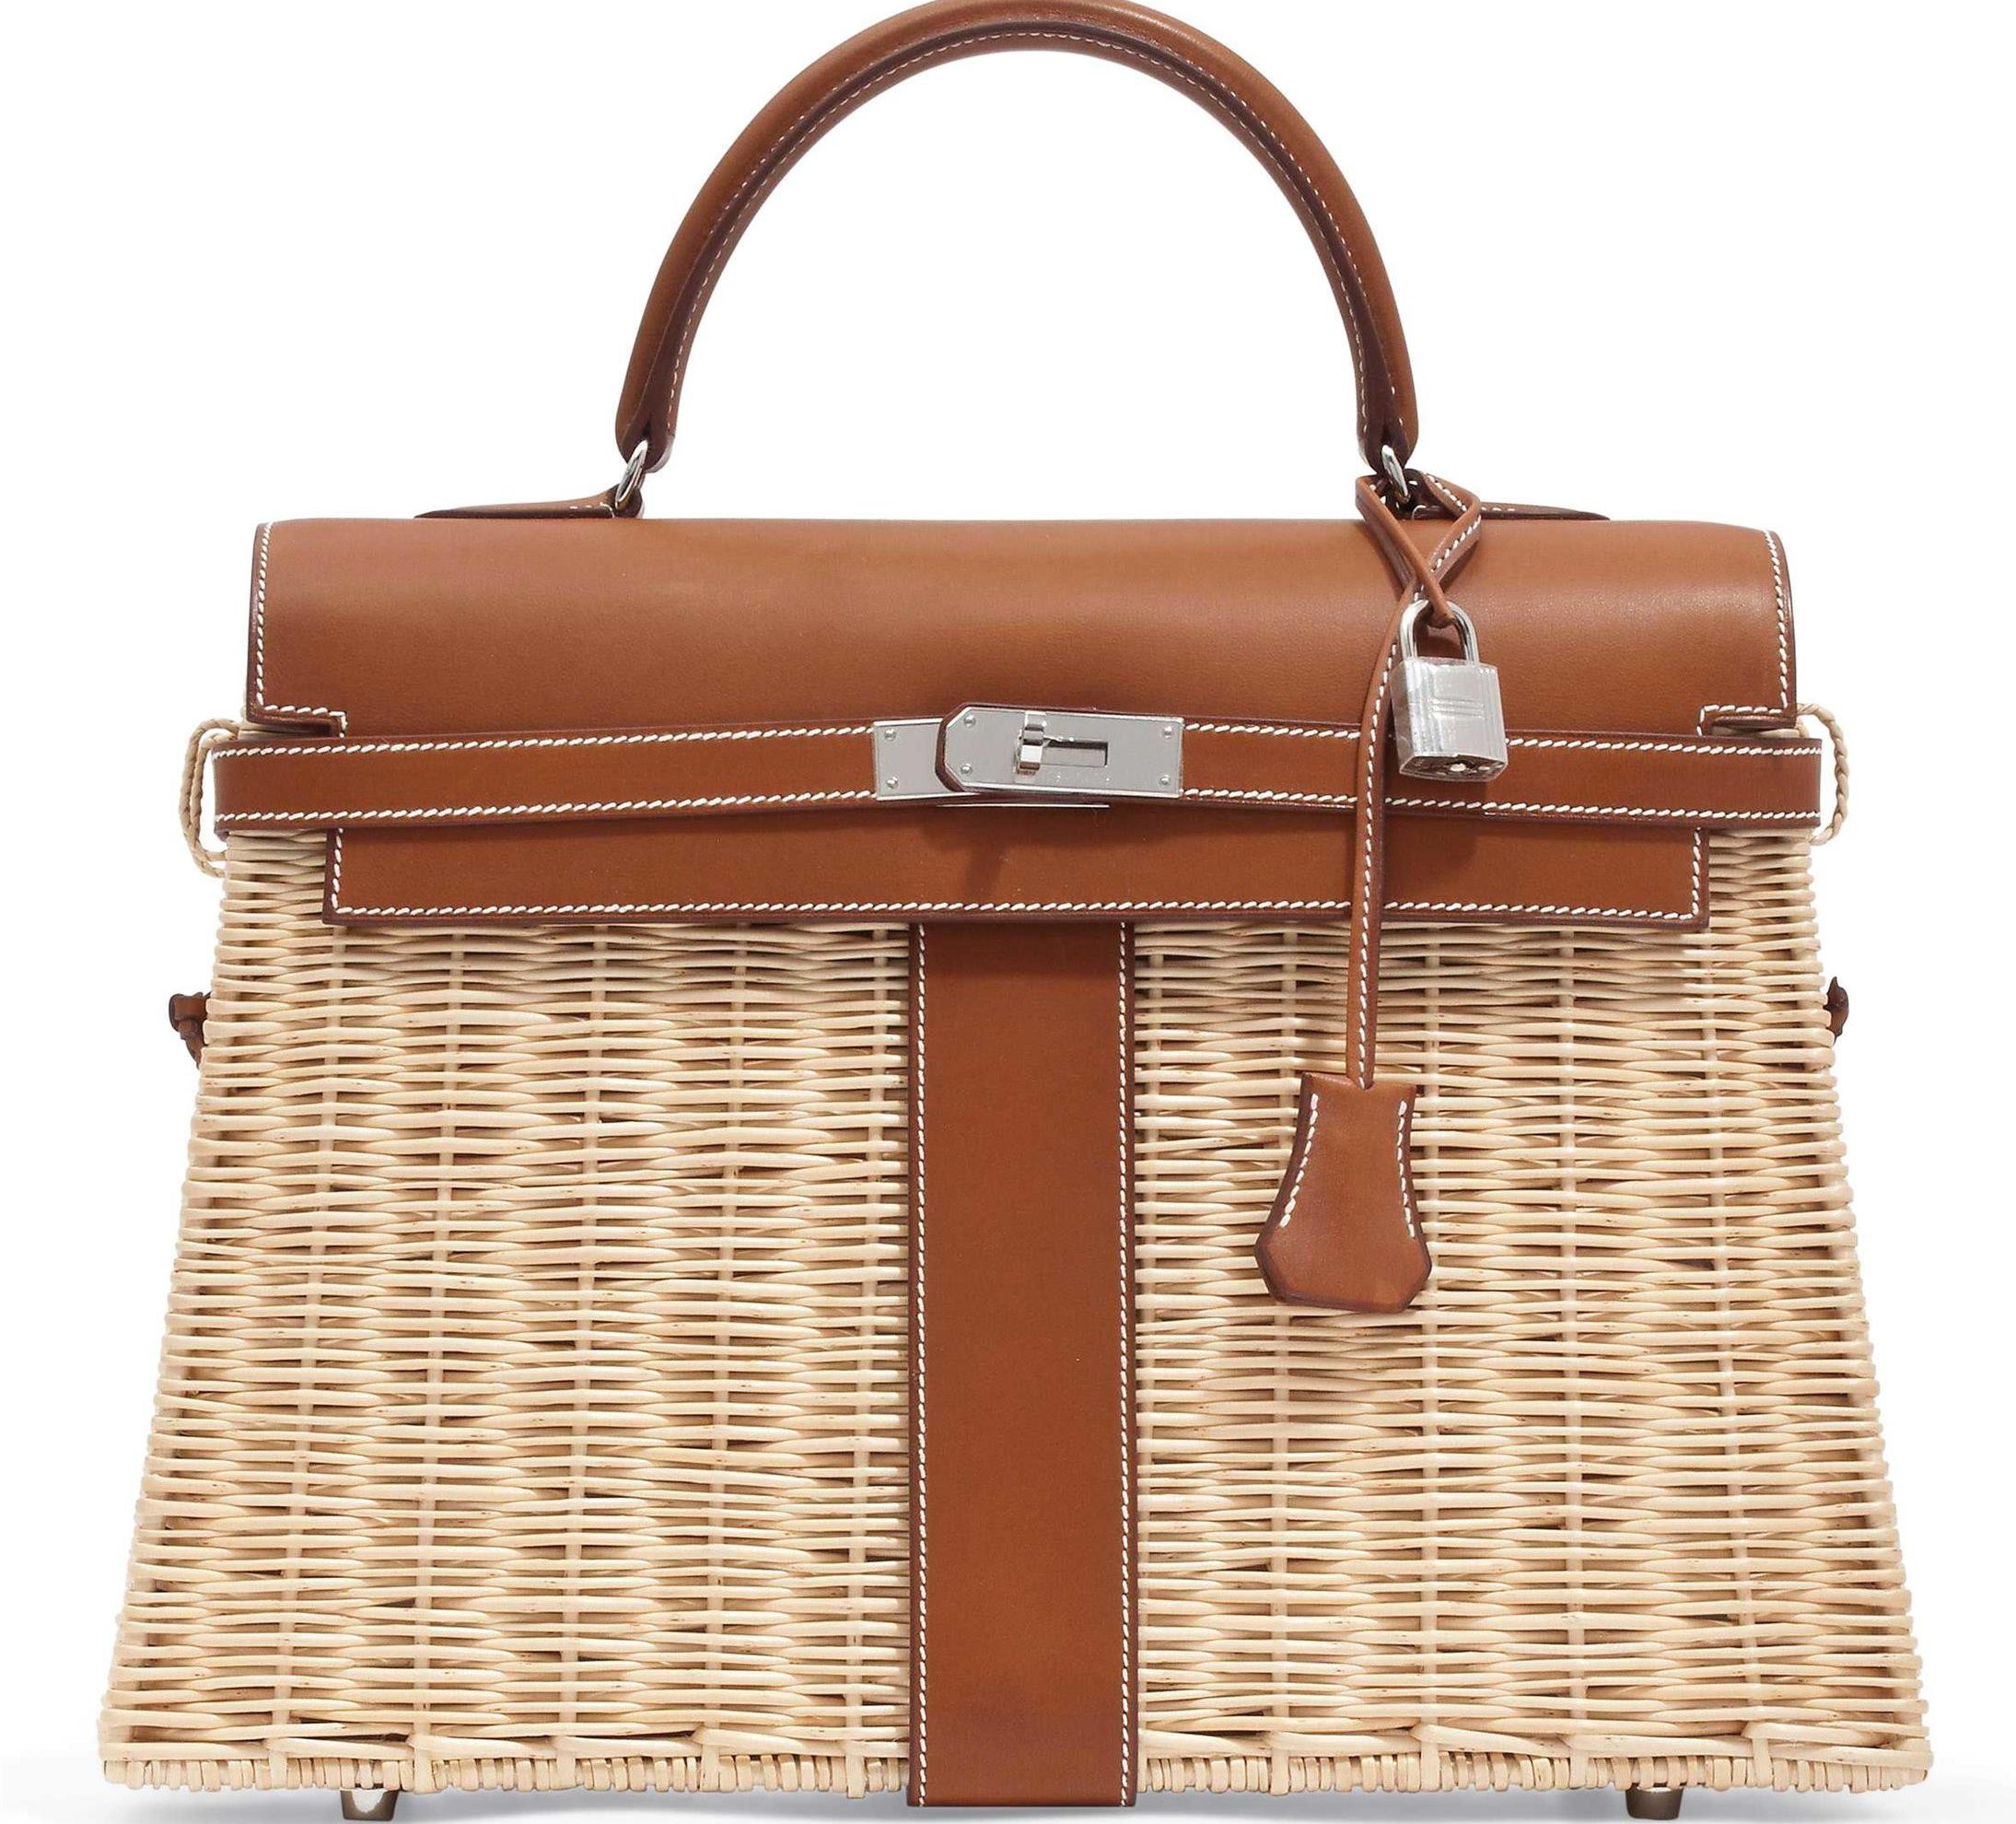 Fall 2020 Handbags – Give your wardrobe a new look